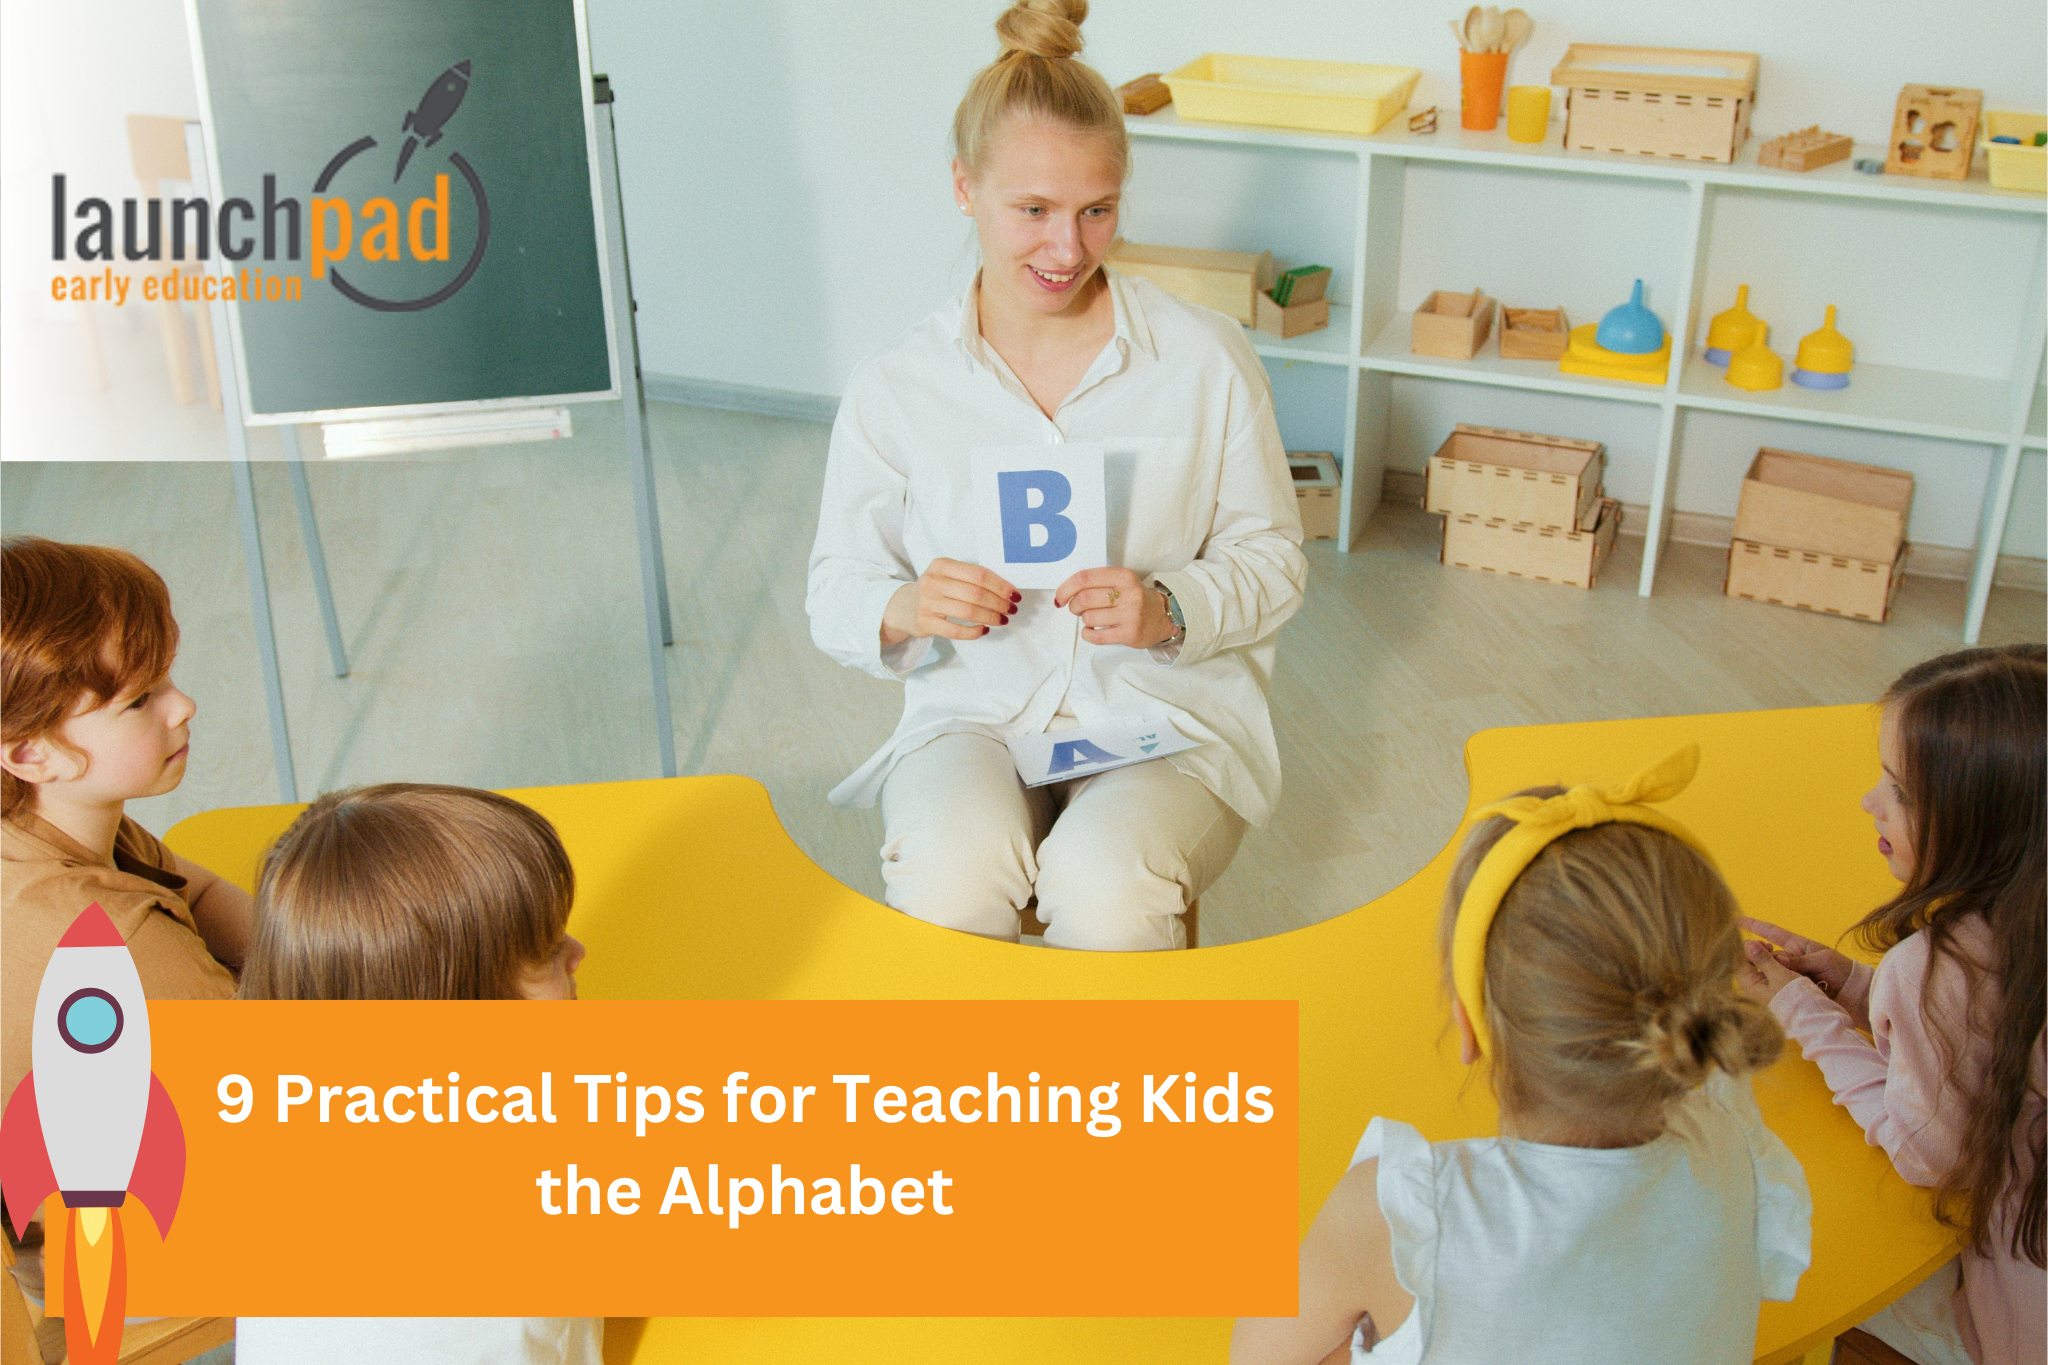 teaching kids the alphabet